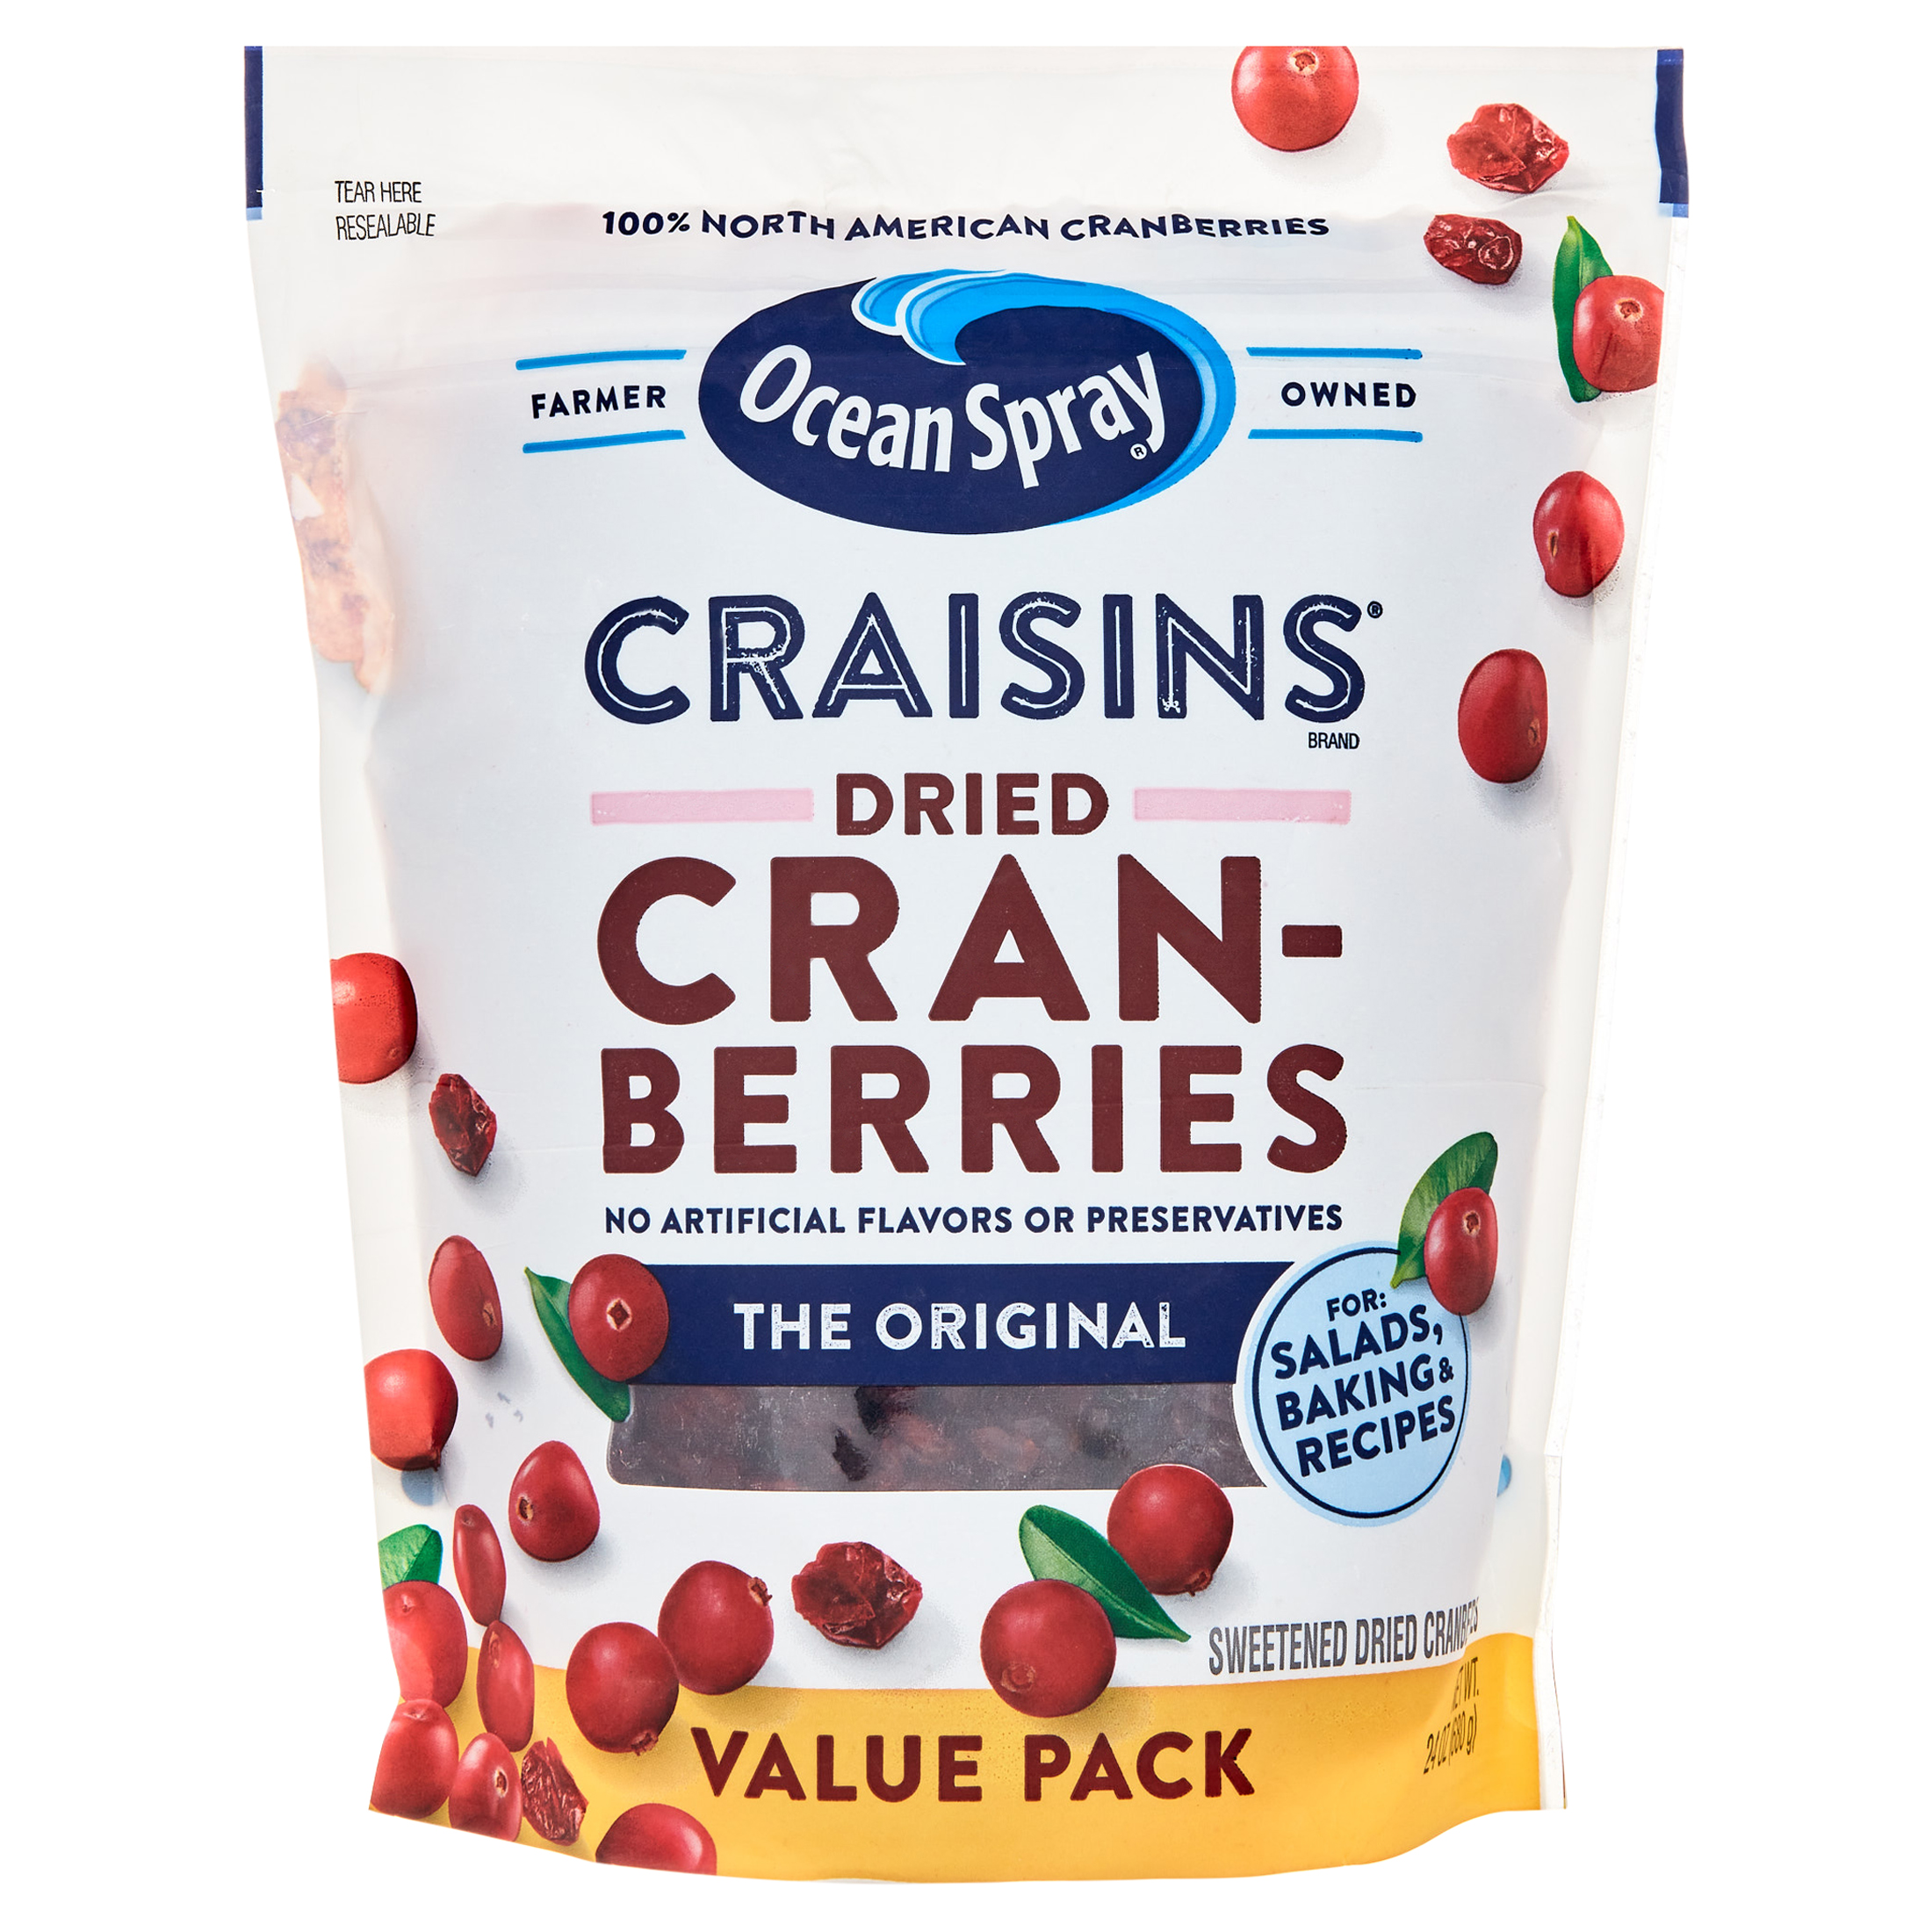 Ocean Spray® Craisins® Original Dried Cranberries, Dried Fruit, 24 oz Pouch - image 1 of 12